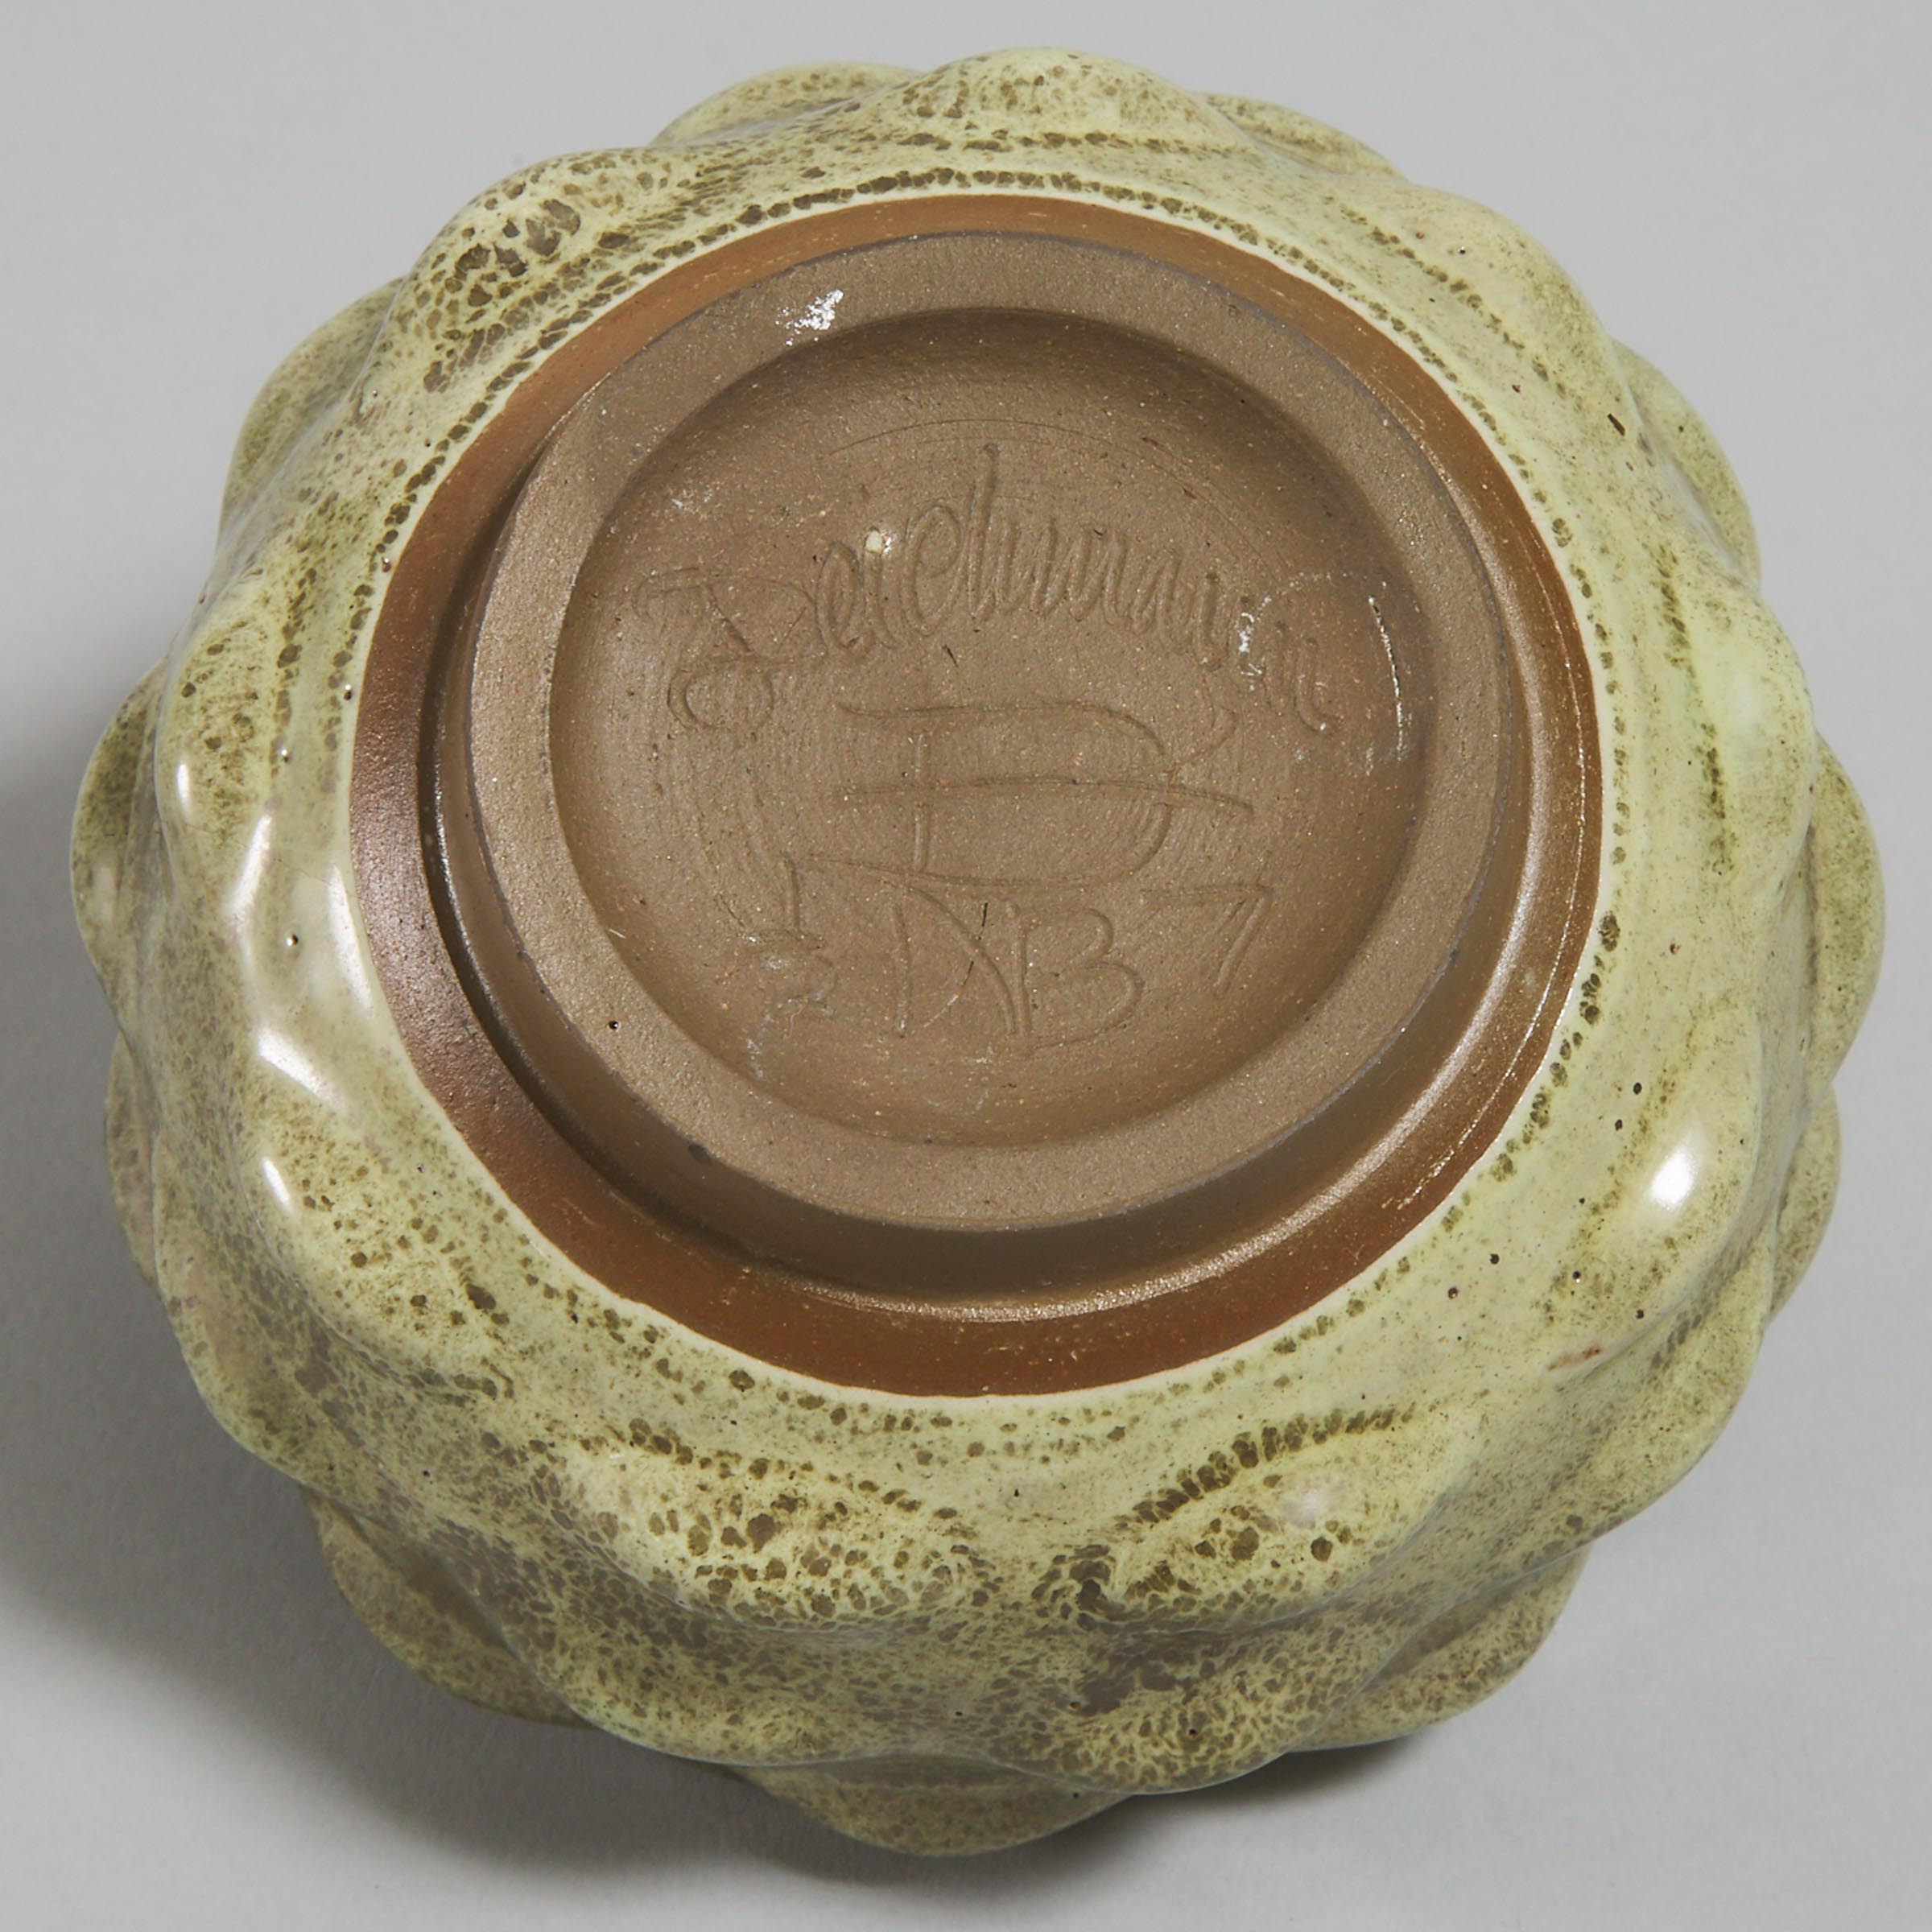 Deichmann Mottled Green Glazed Stoneware 'Kish' Bowl, Kjeld & Erica Deichmann, mid-20th century